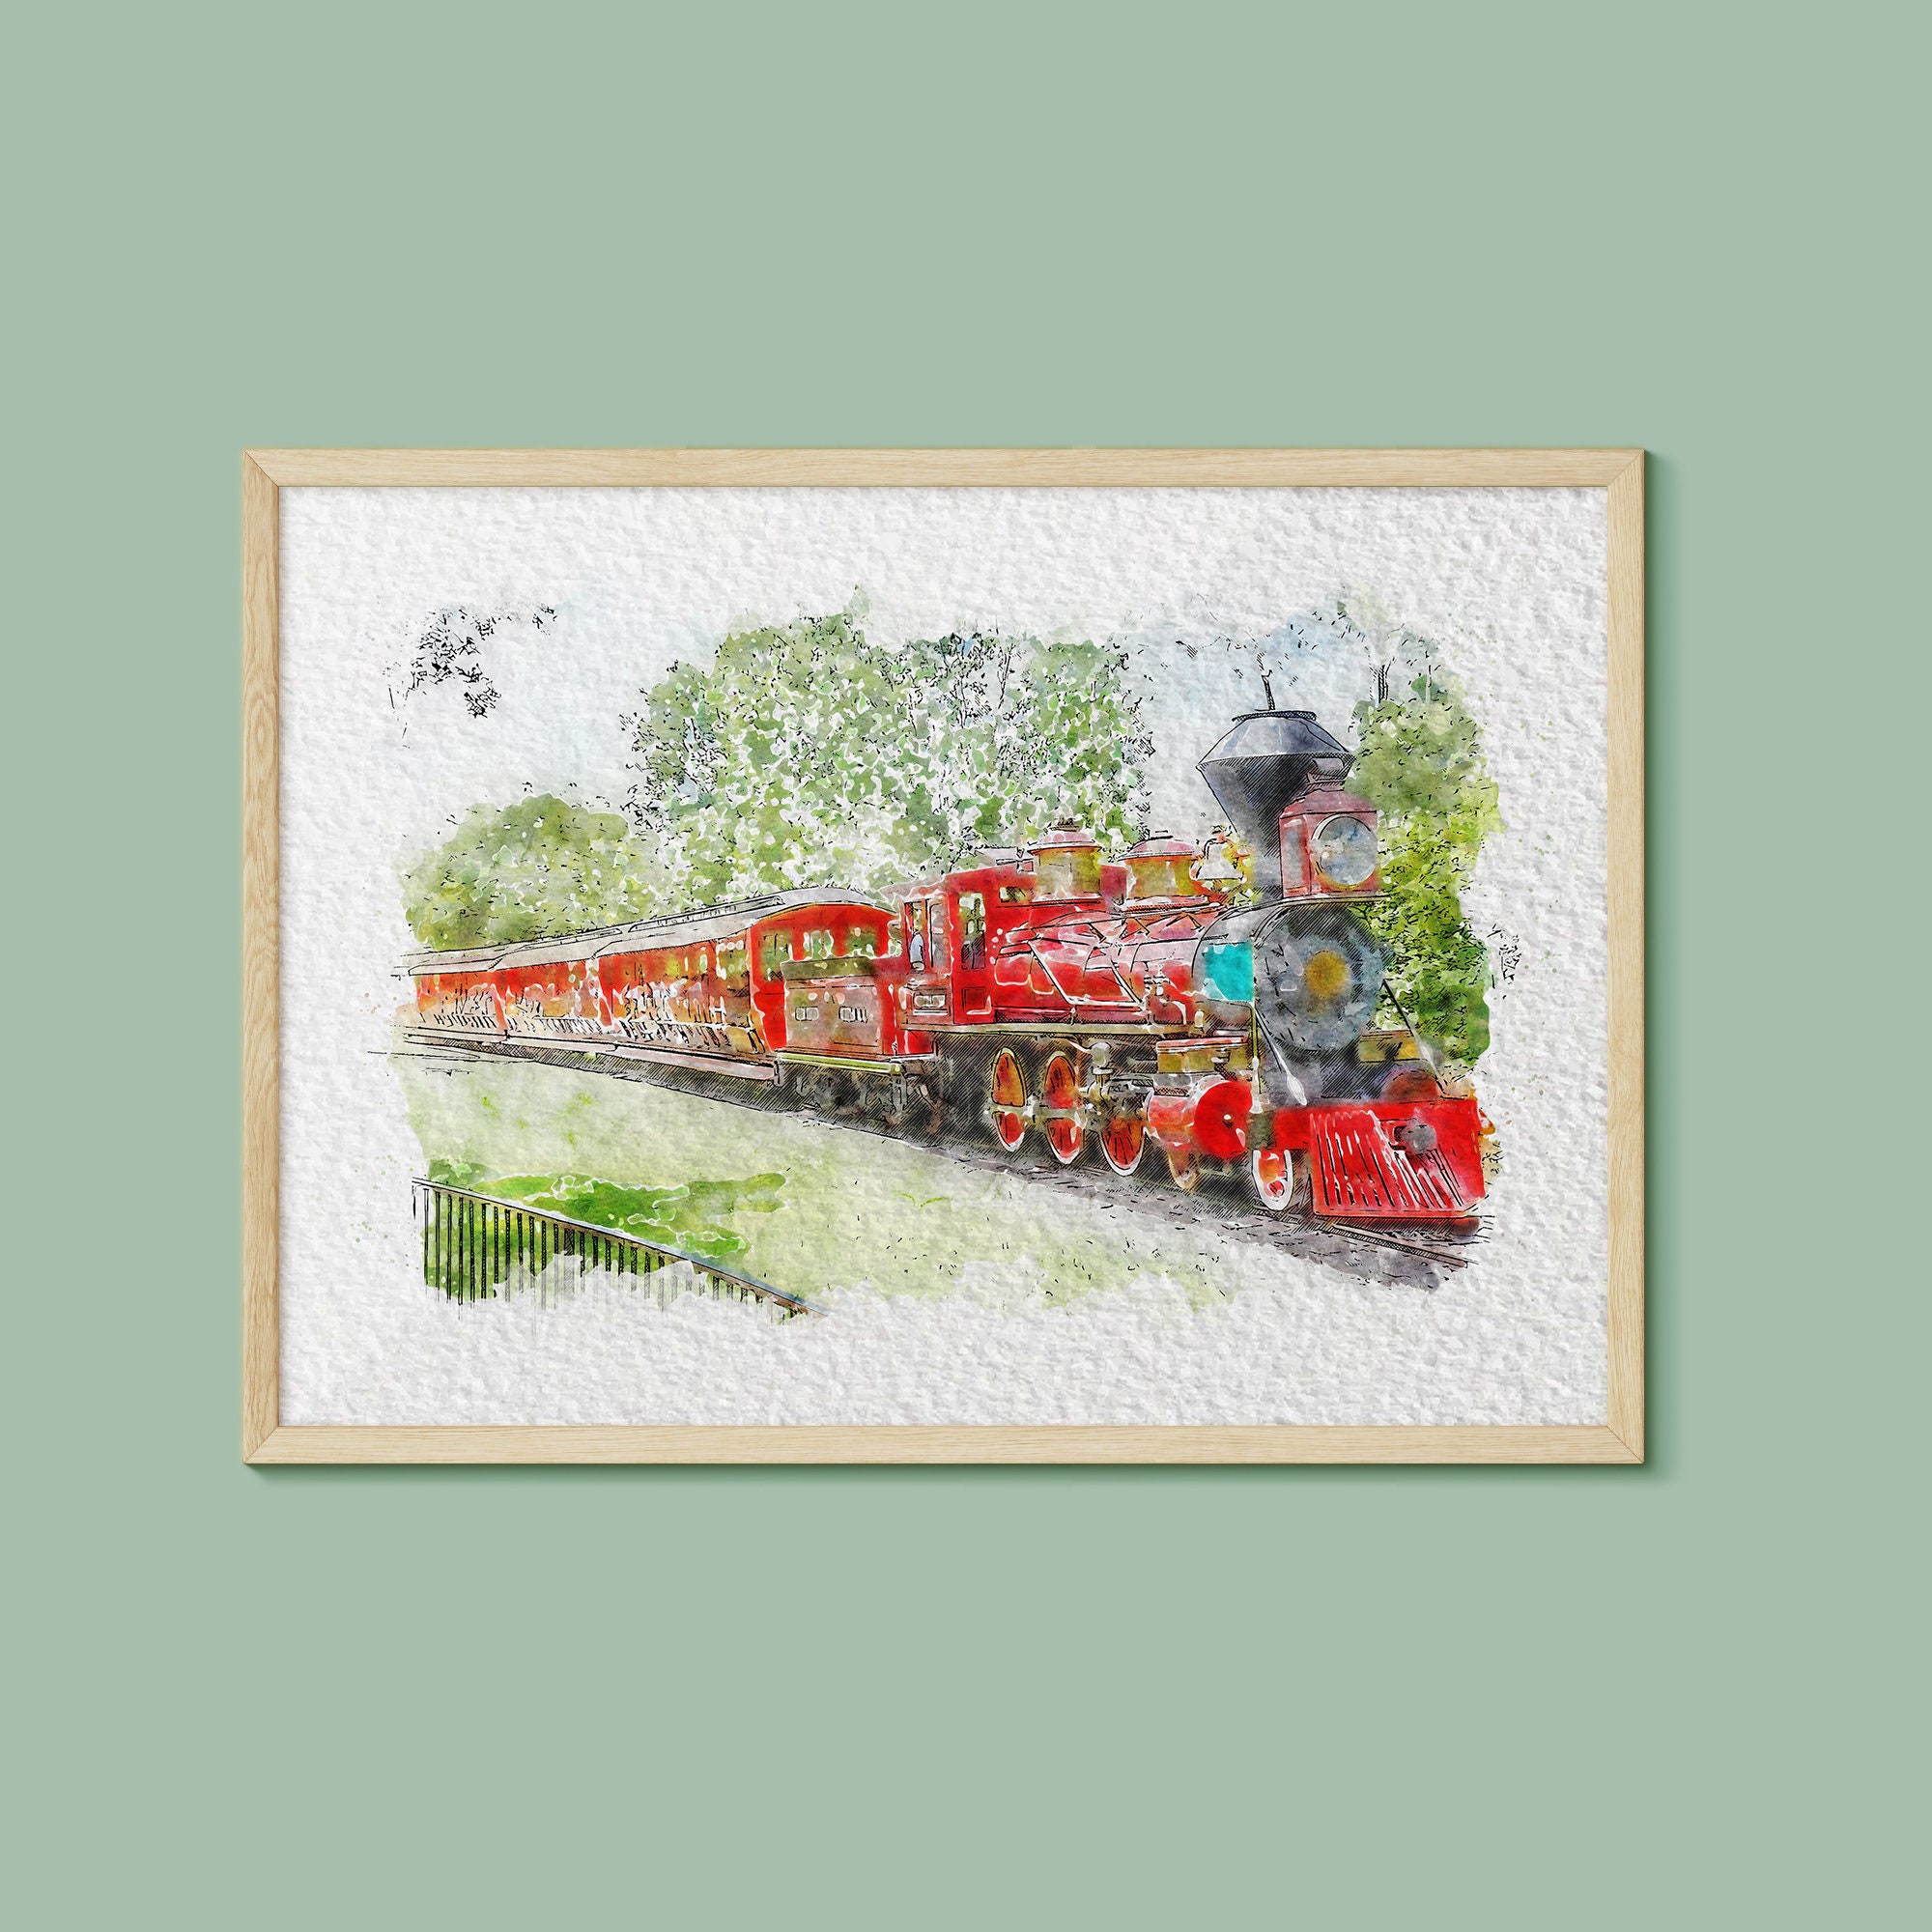 Colorful Walt Disney World Railroad in Magic Kingdom 1 Editorial Stock  Photo - Image of holidays, fairy: 144503248